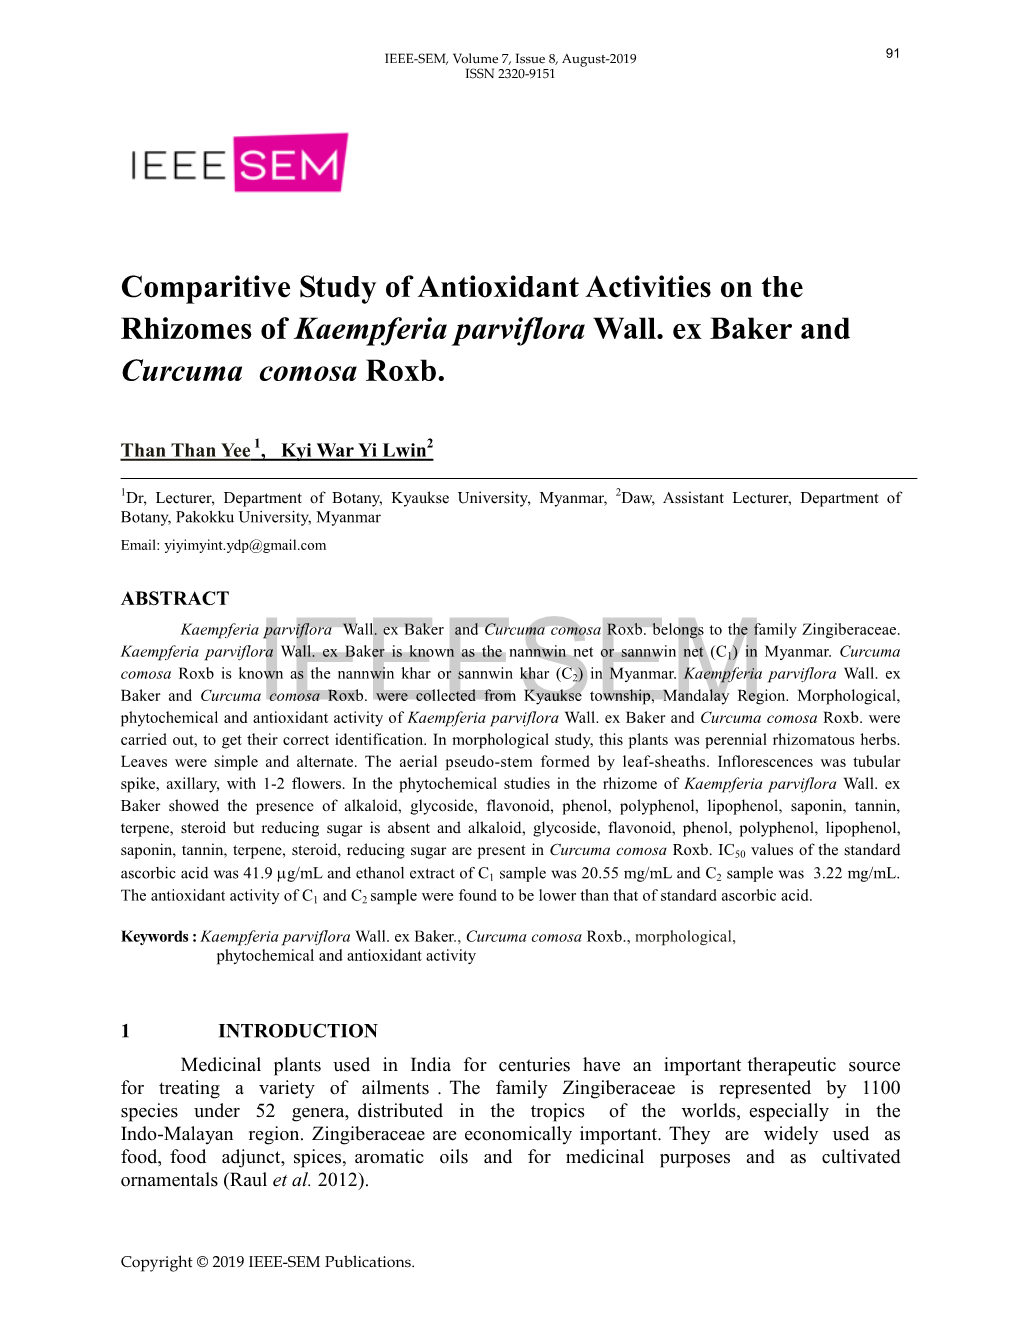 Comparitive Study of Antioxidant Activities on the Rhizomes of Kaempferia Parviflora Wall